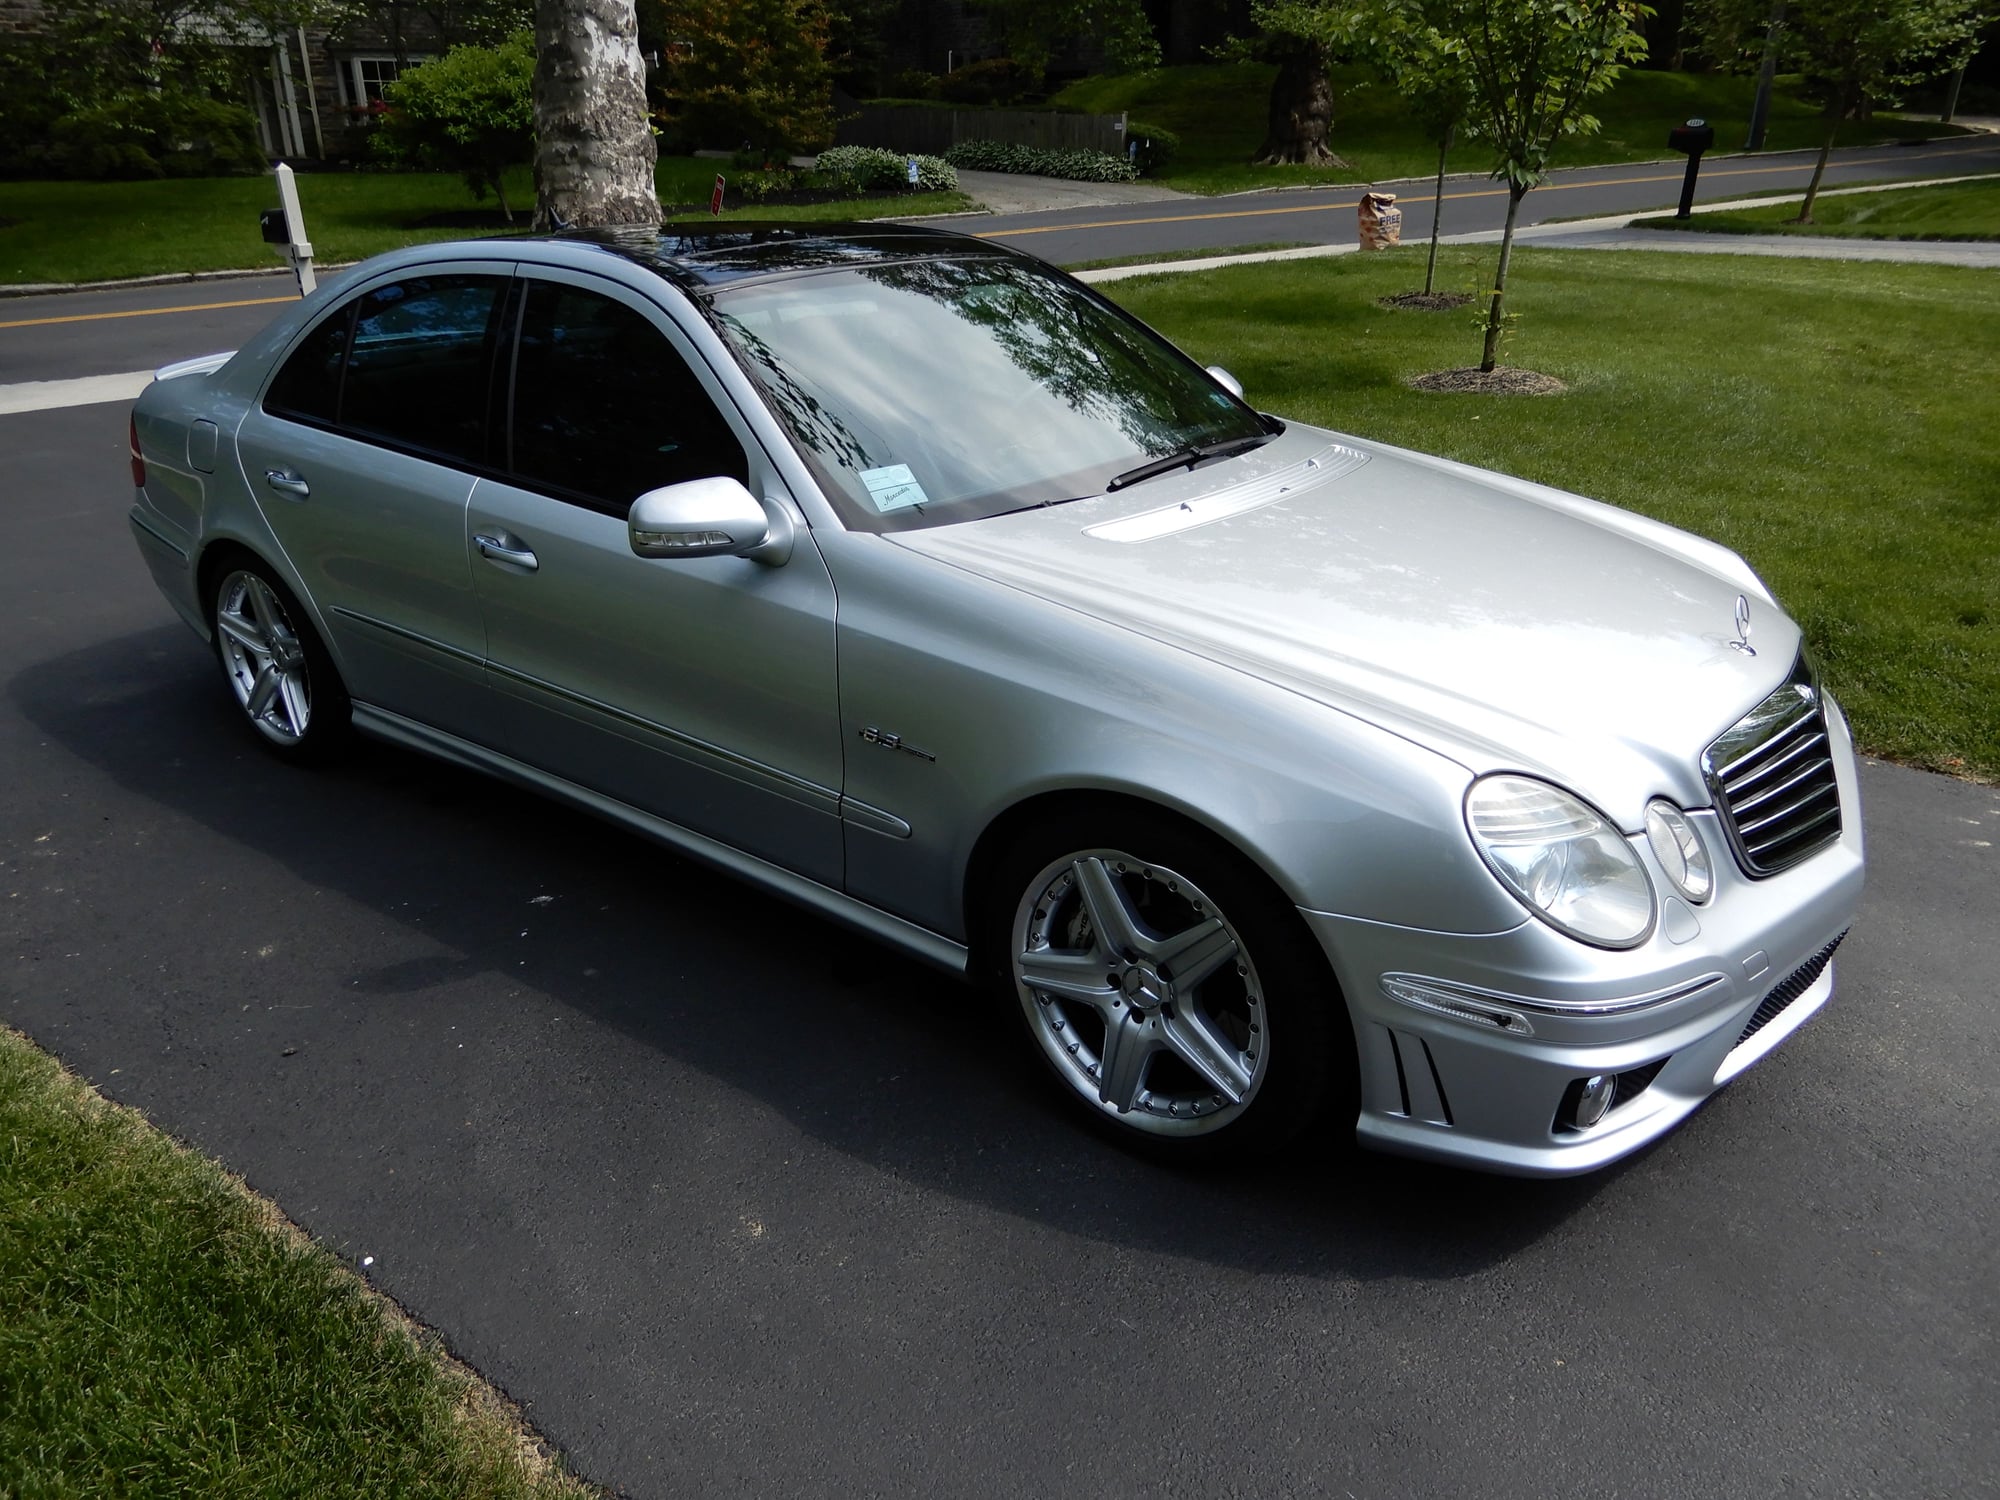 2007 Mercedes-Benz E63 AMG - Selling 2007 E63 AMG w/P030 - Used - VIN WDBUF77X97B158376 - 85,946 Miles - 8 cyl - 2WD - Automatic - Sedan - Silver - Philadelphia, PA 19096, United States